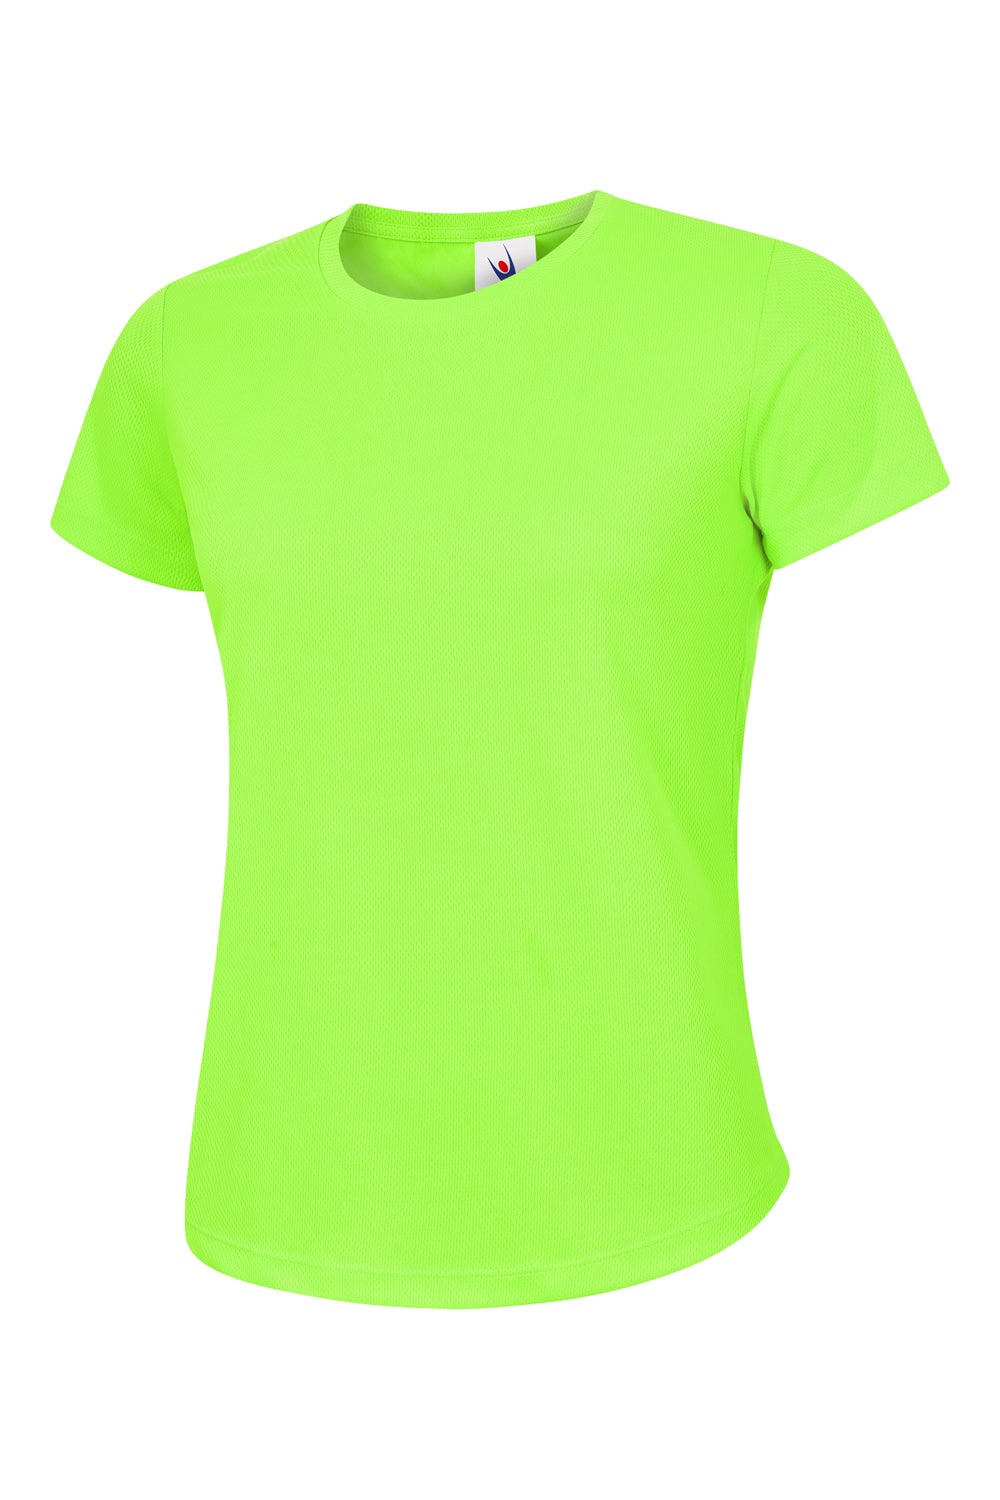 Uneek Ladies Ultra Cool T Shirt UC316 - Electric Green